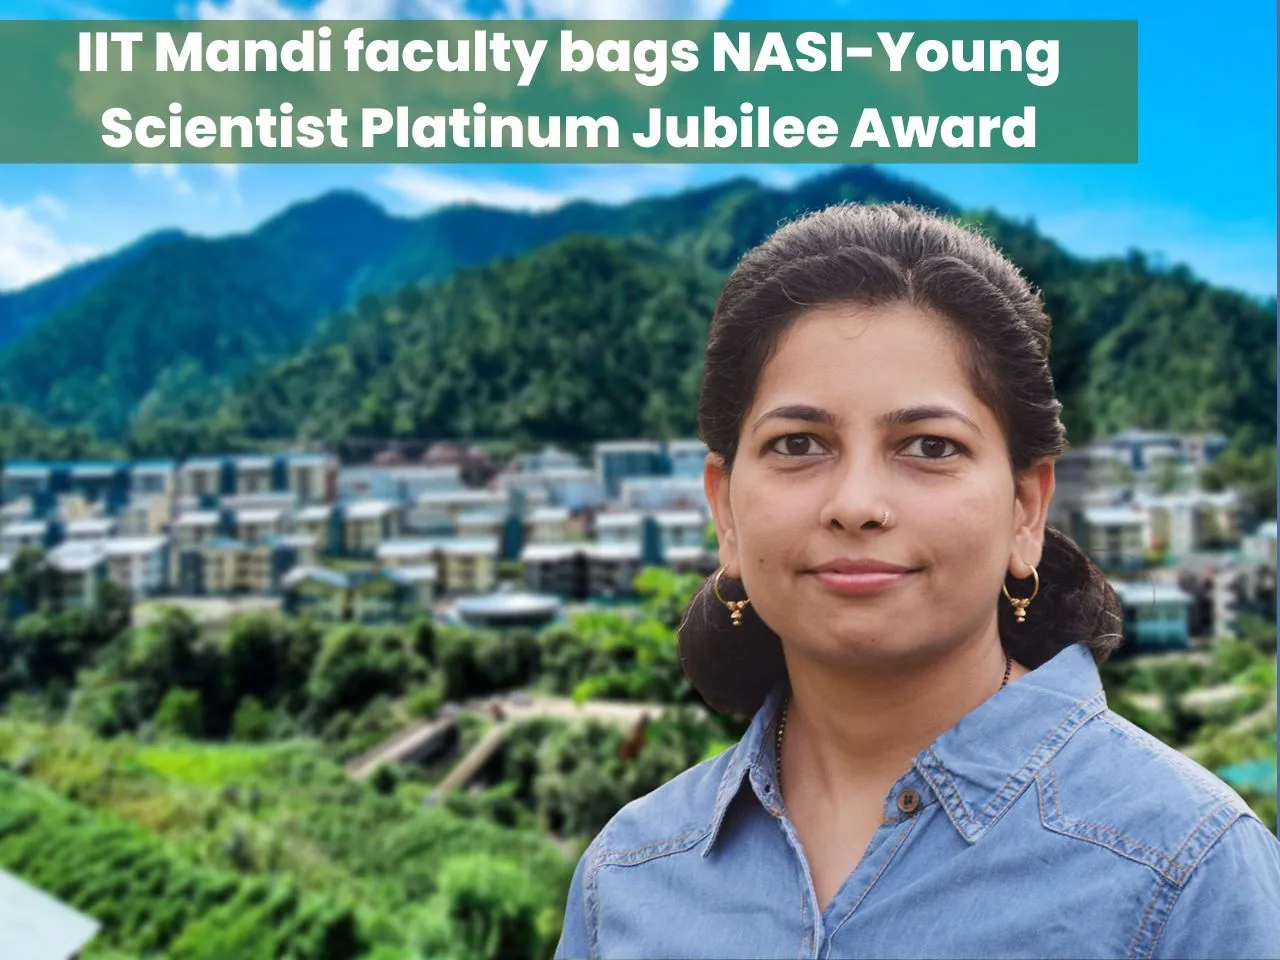 IIT Mandi faculty bags NASI-Young Scientist Platinum Jubilee Award